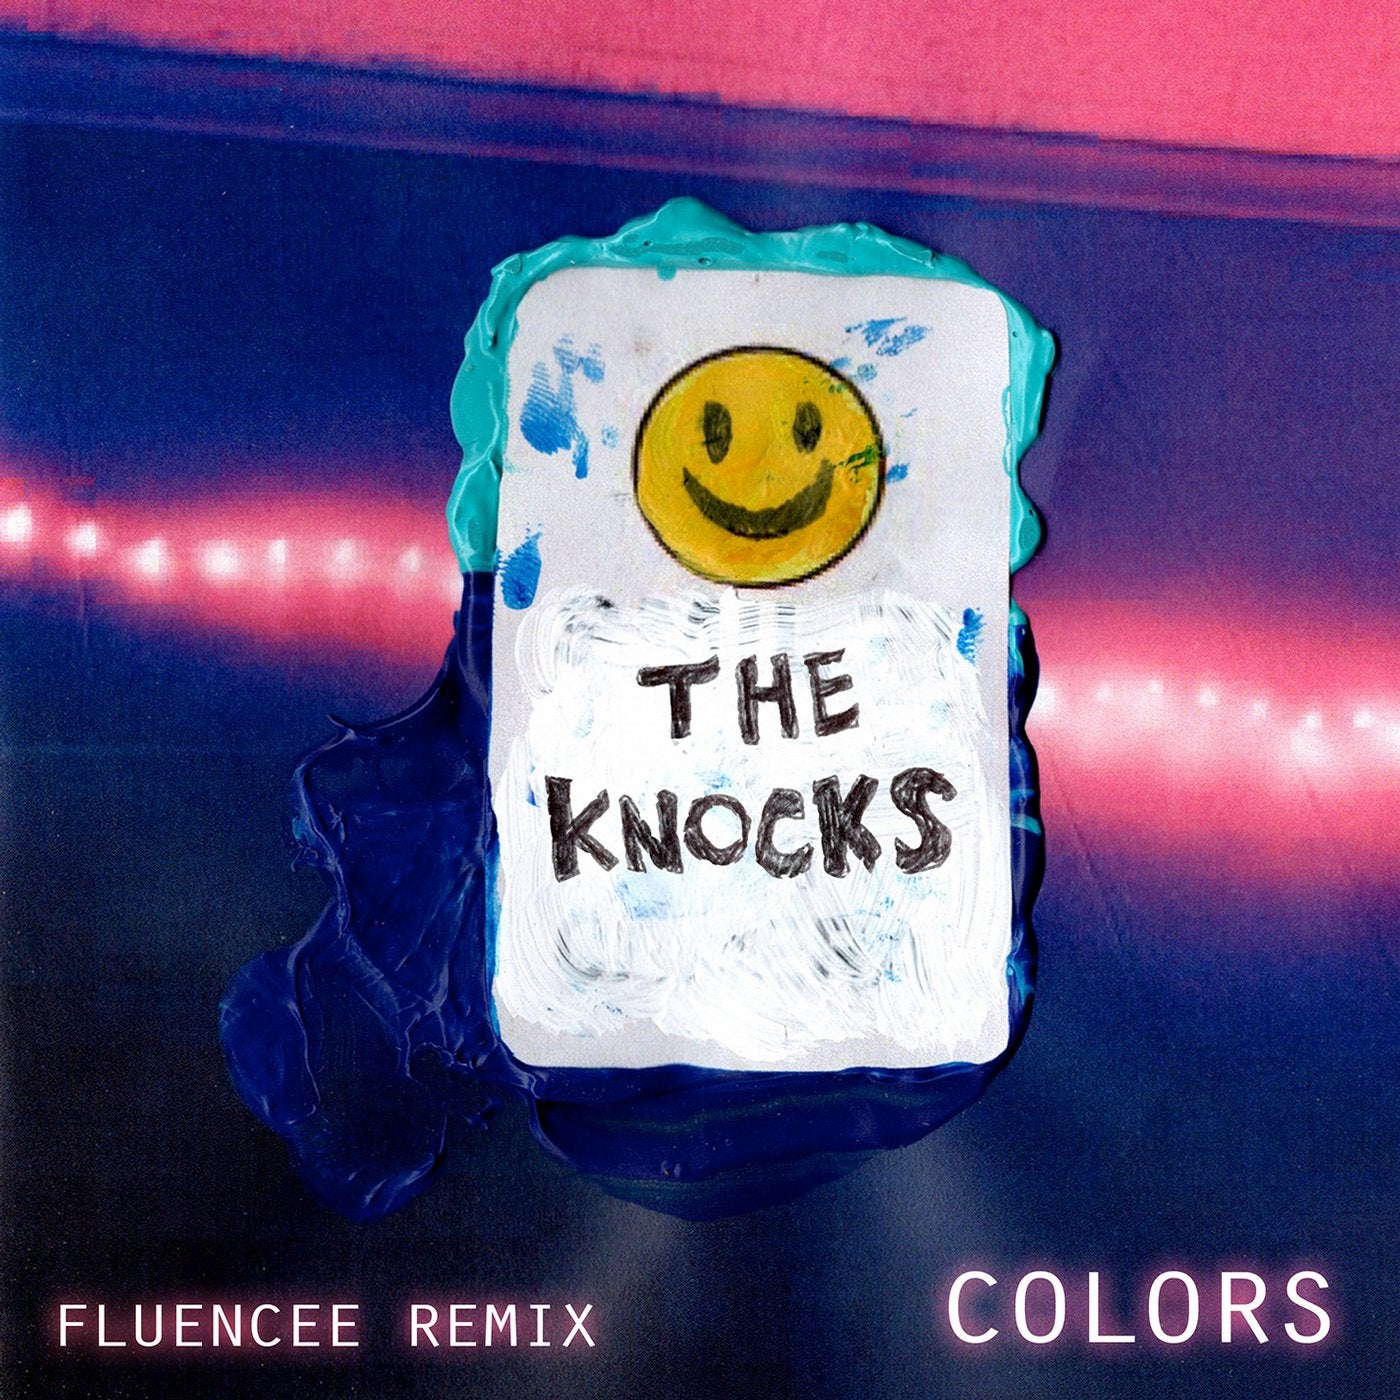 Colors (Fluencee Remix)